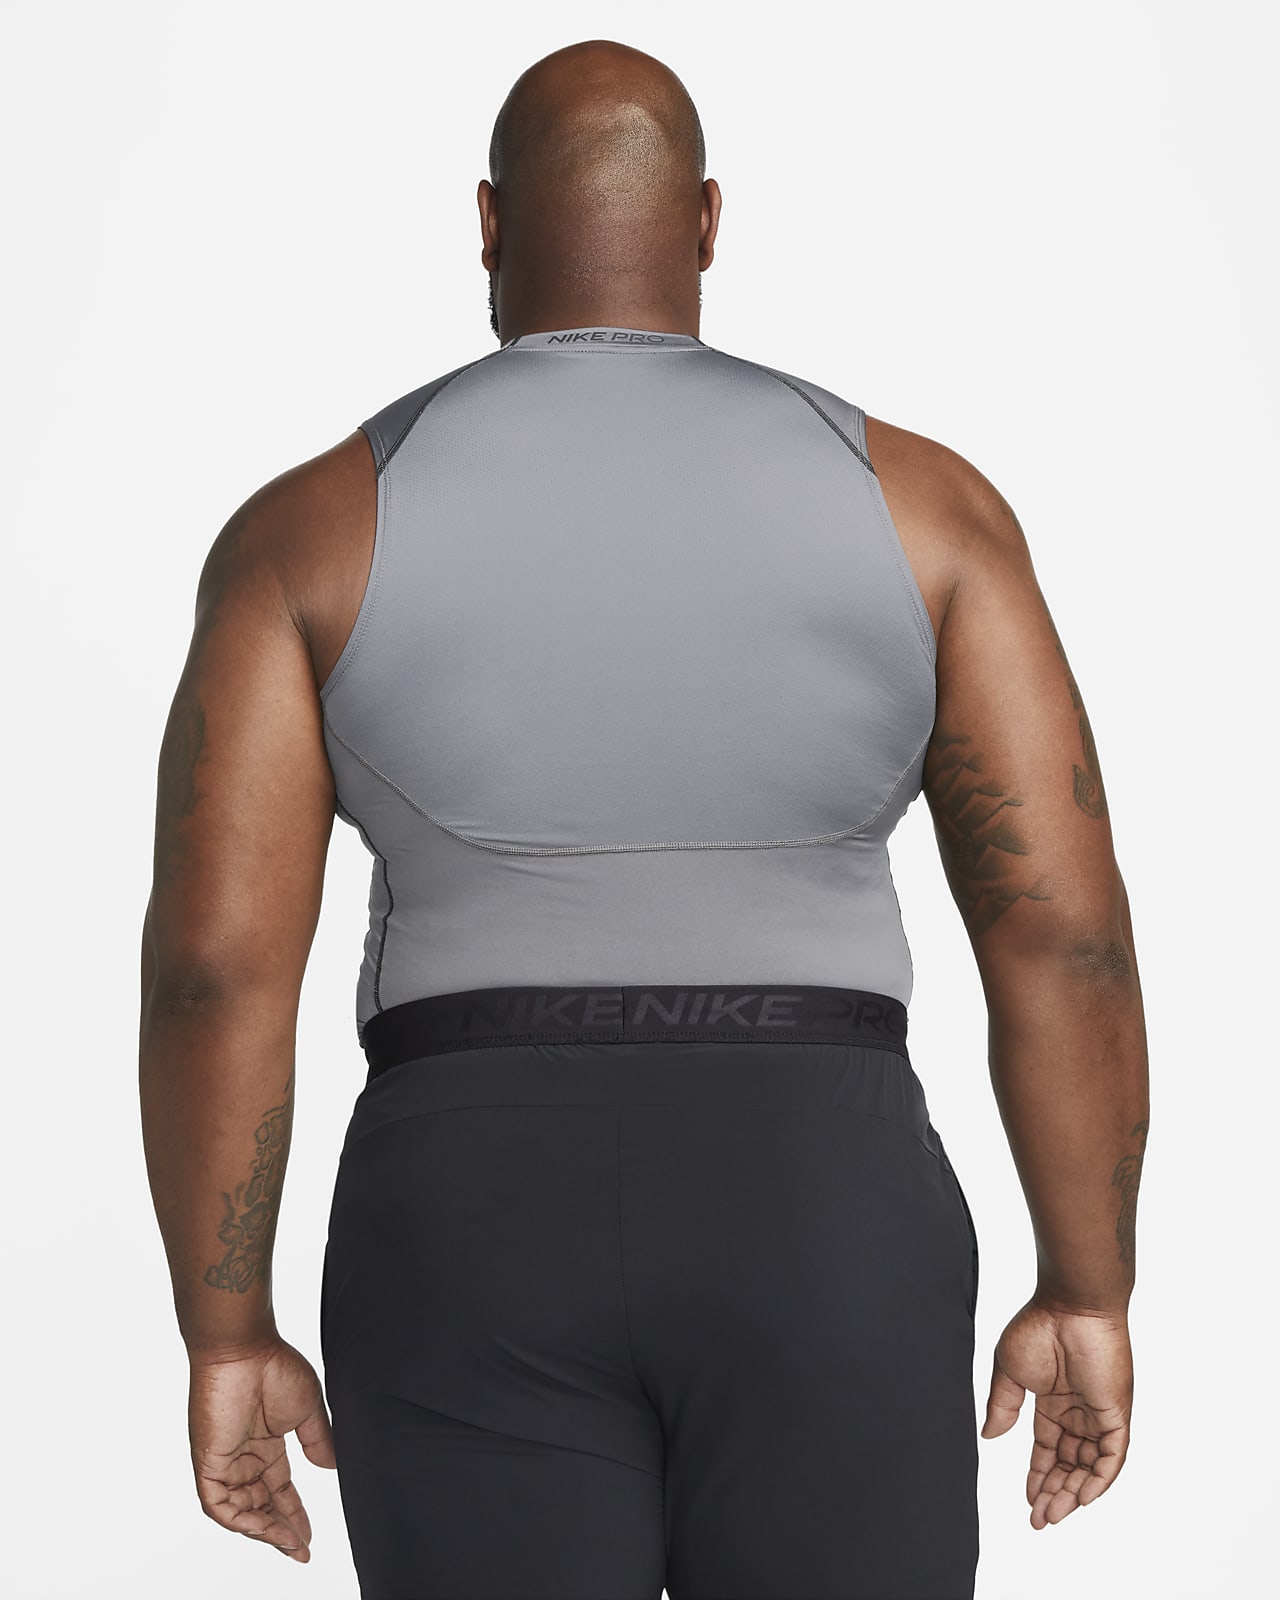 Mens Nike Pro Tank Tops & Sleeveless Shirts.